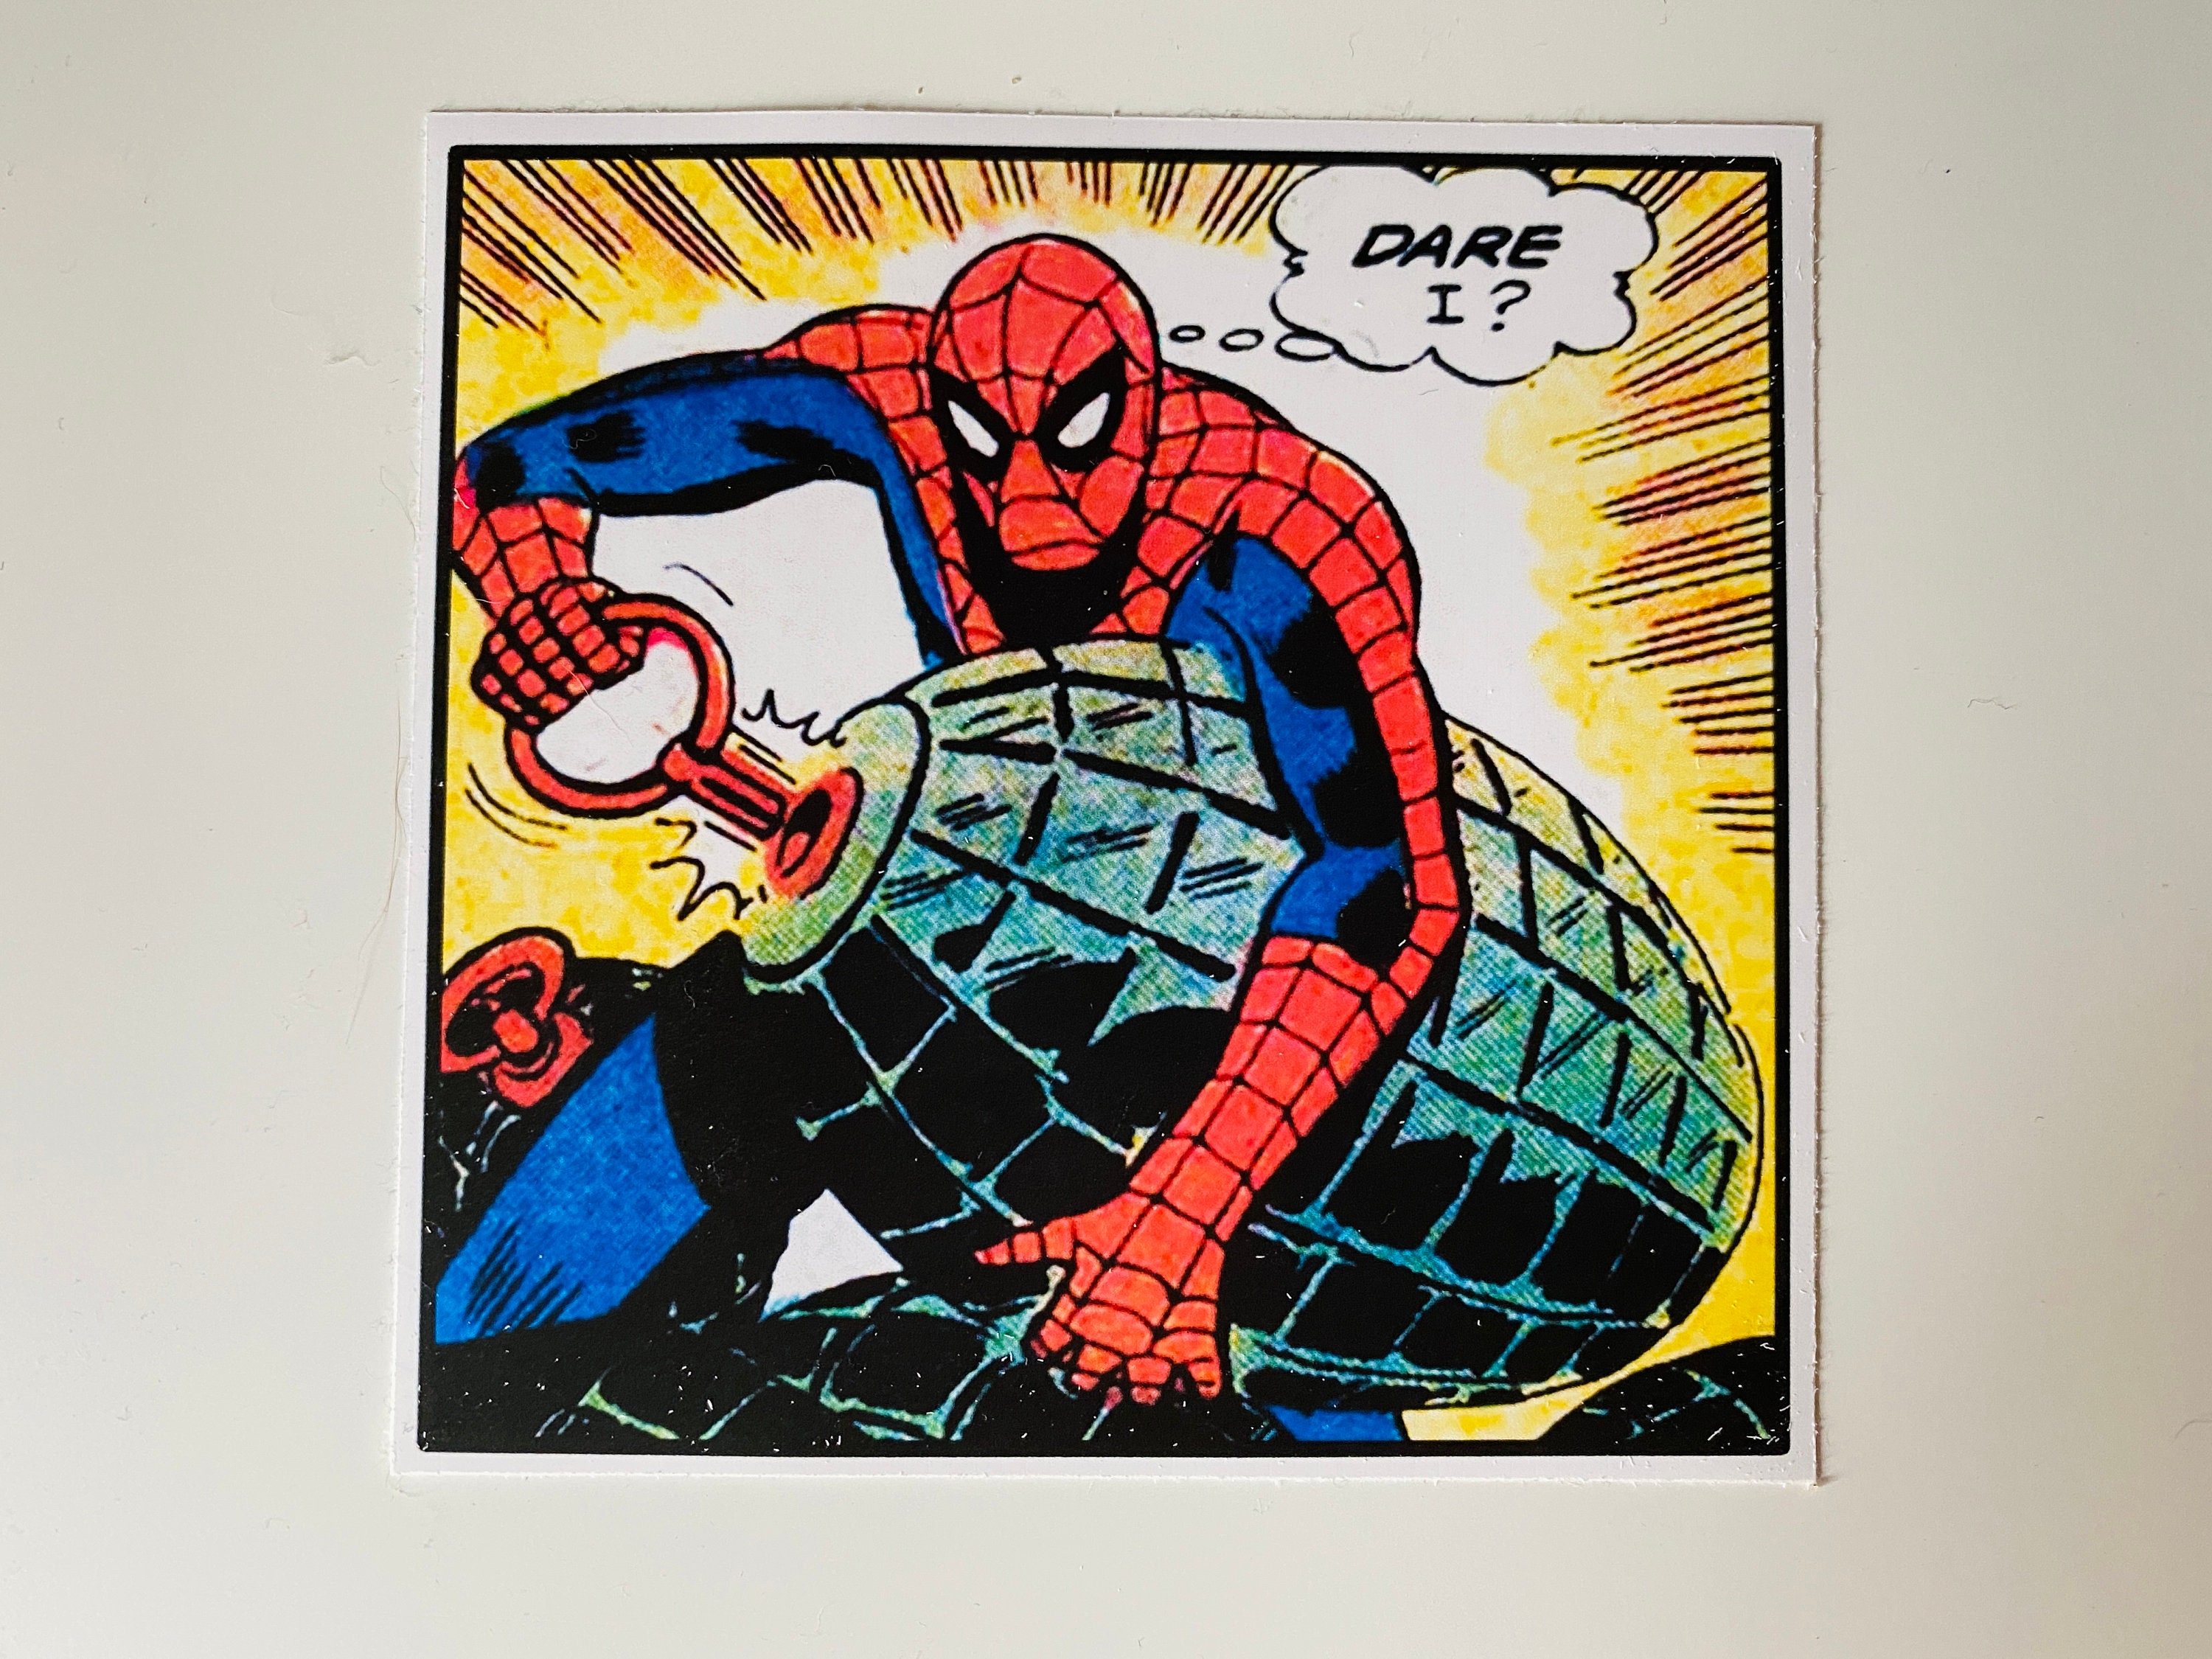 Italy 1995 Panini Spiderman Marvel Comics sticker pack